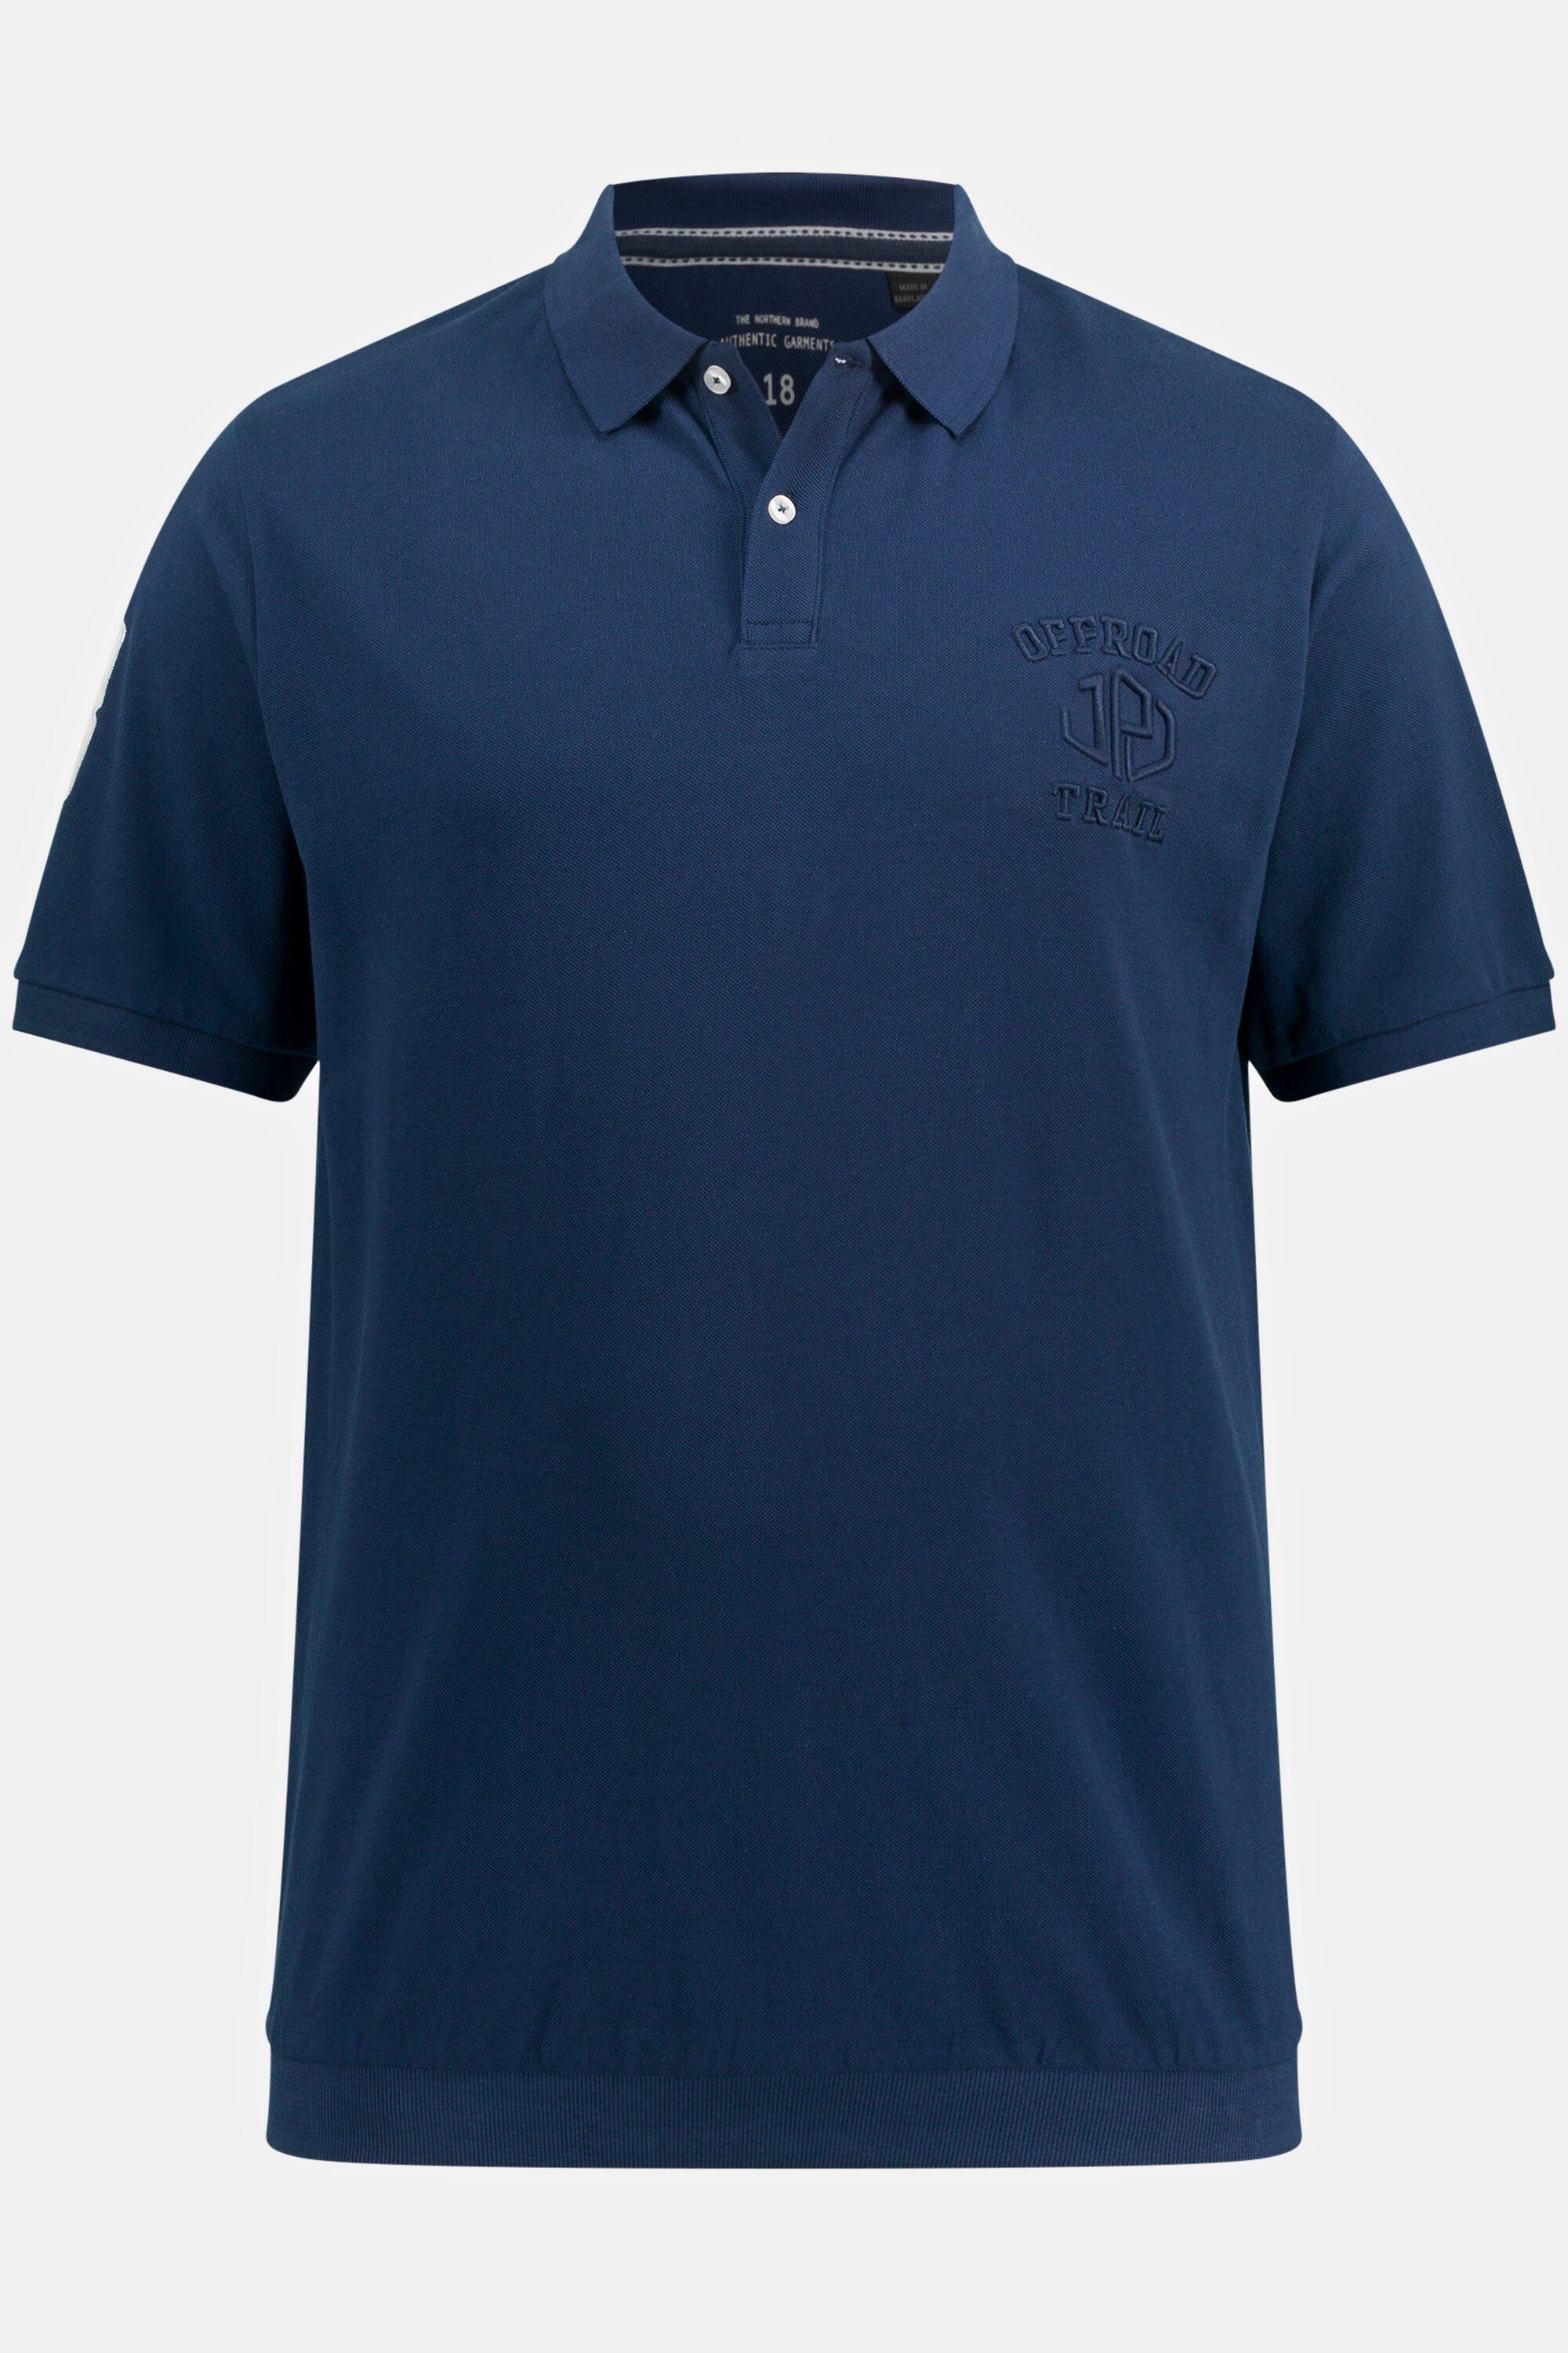 JP1880 nachtblau Poloshirt XL Bauchfit 8 bis mattes Halbarm Poloshirt